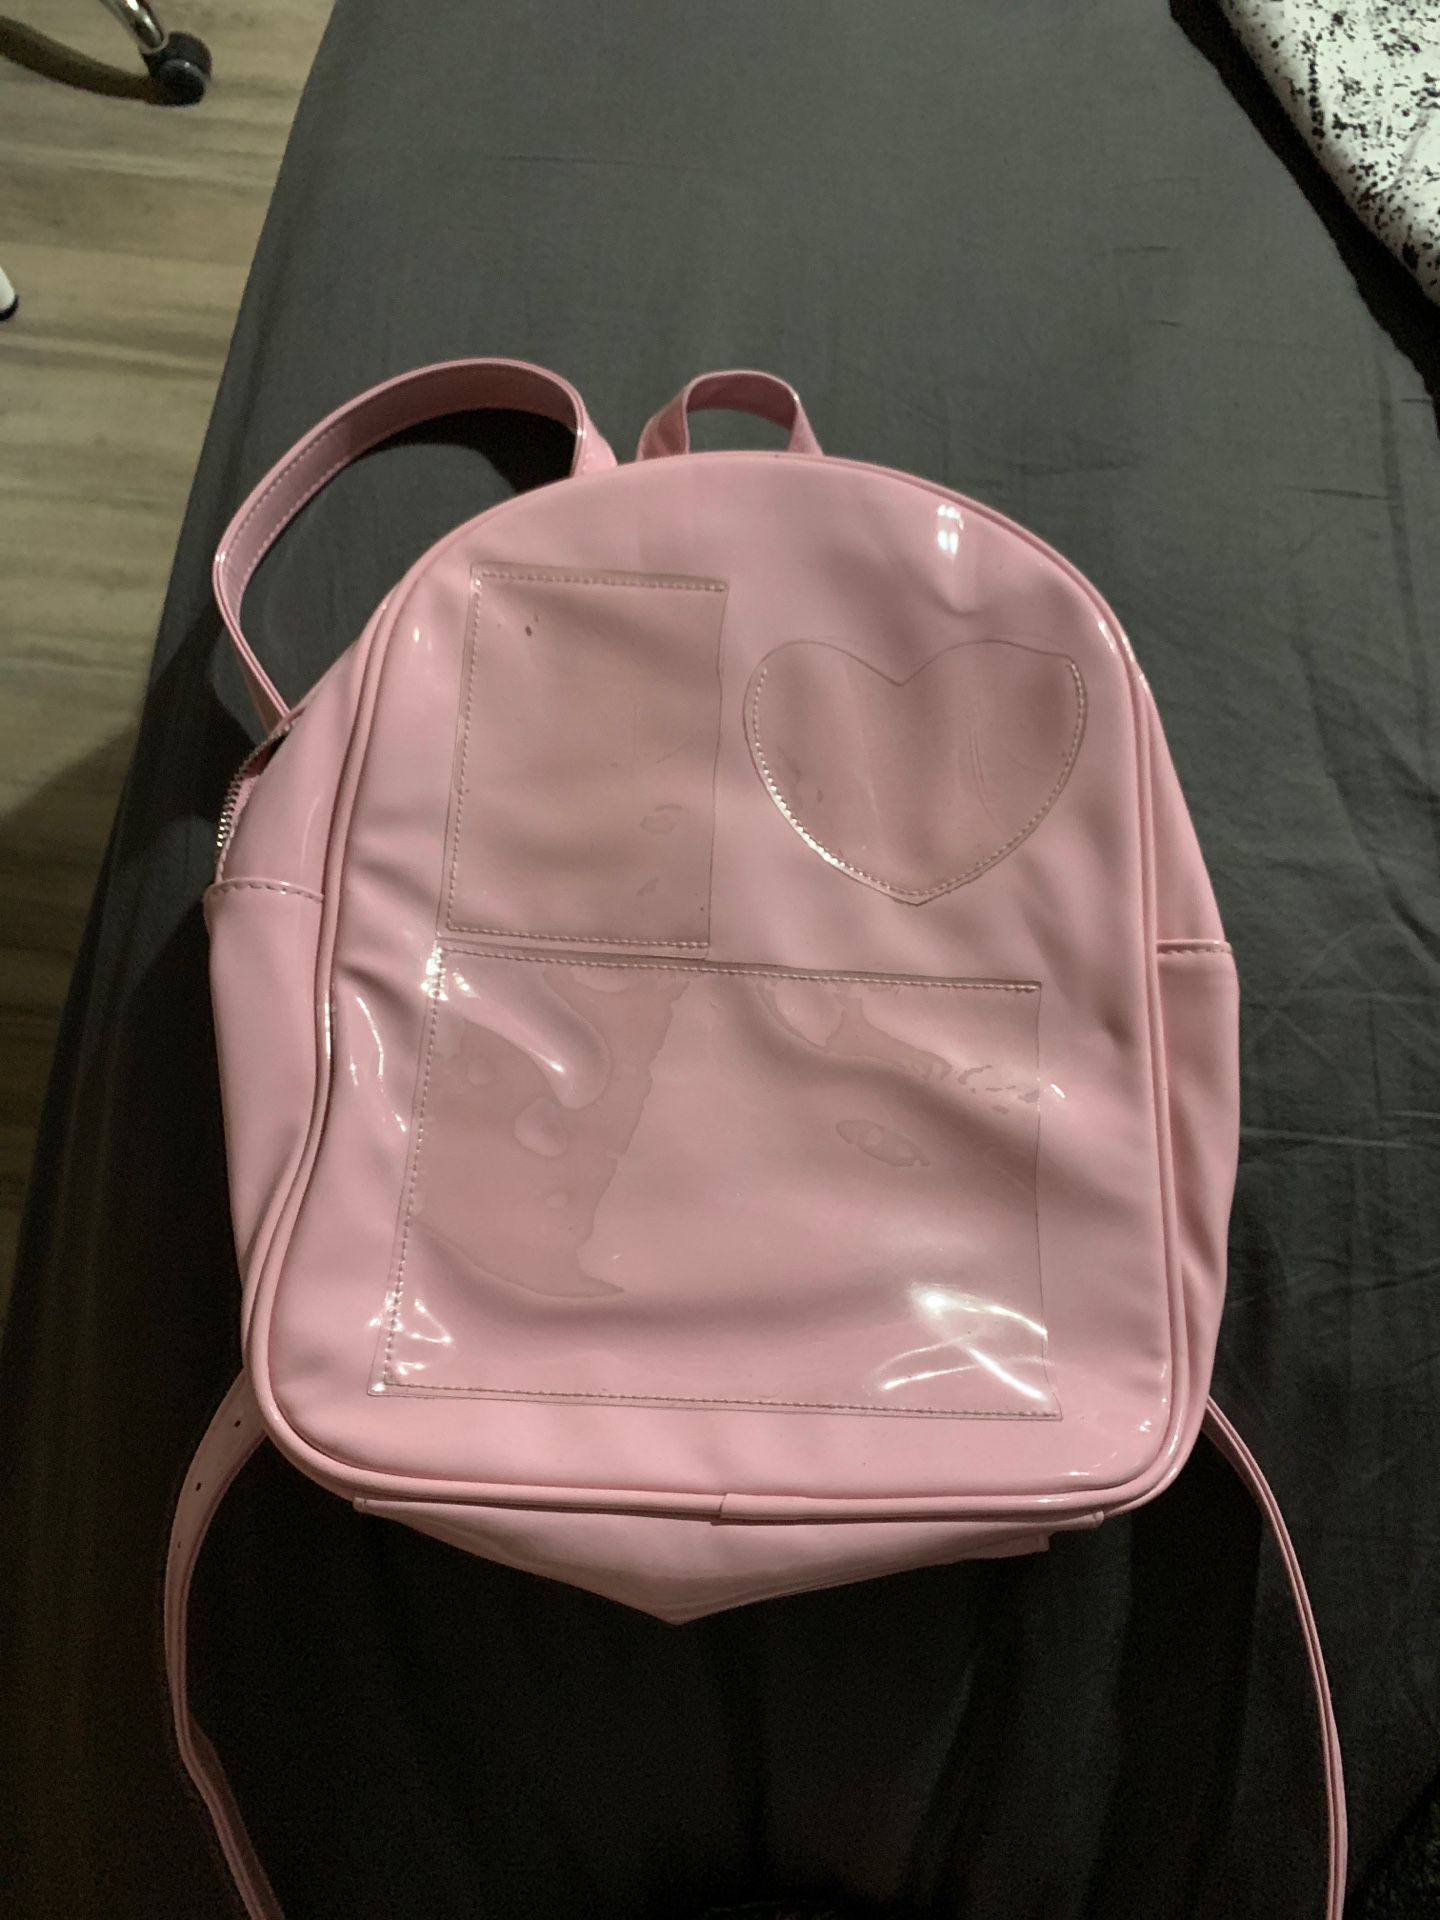 Pink little girl backpack